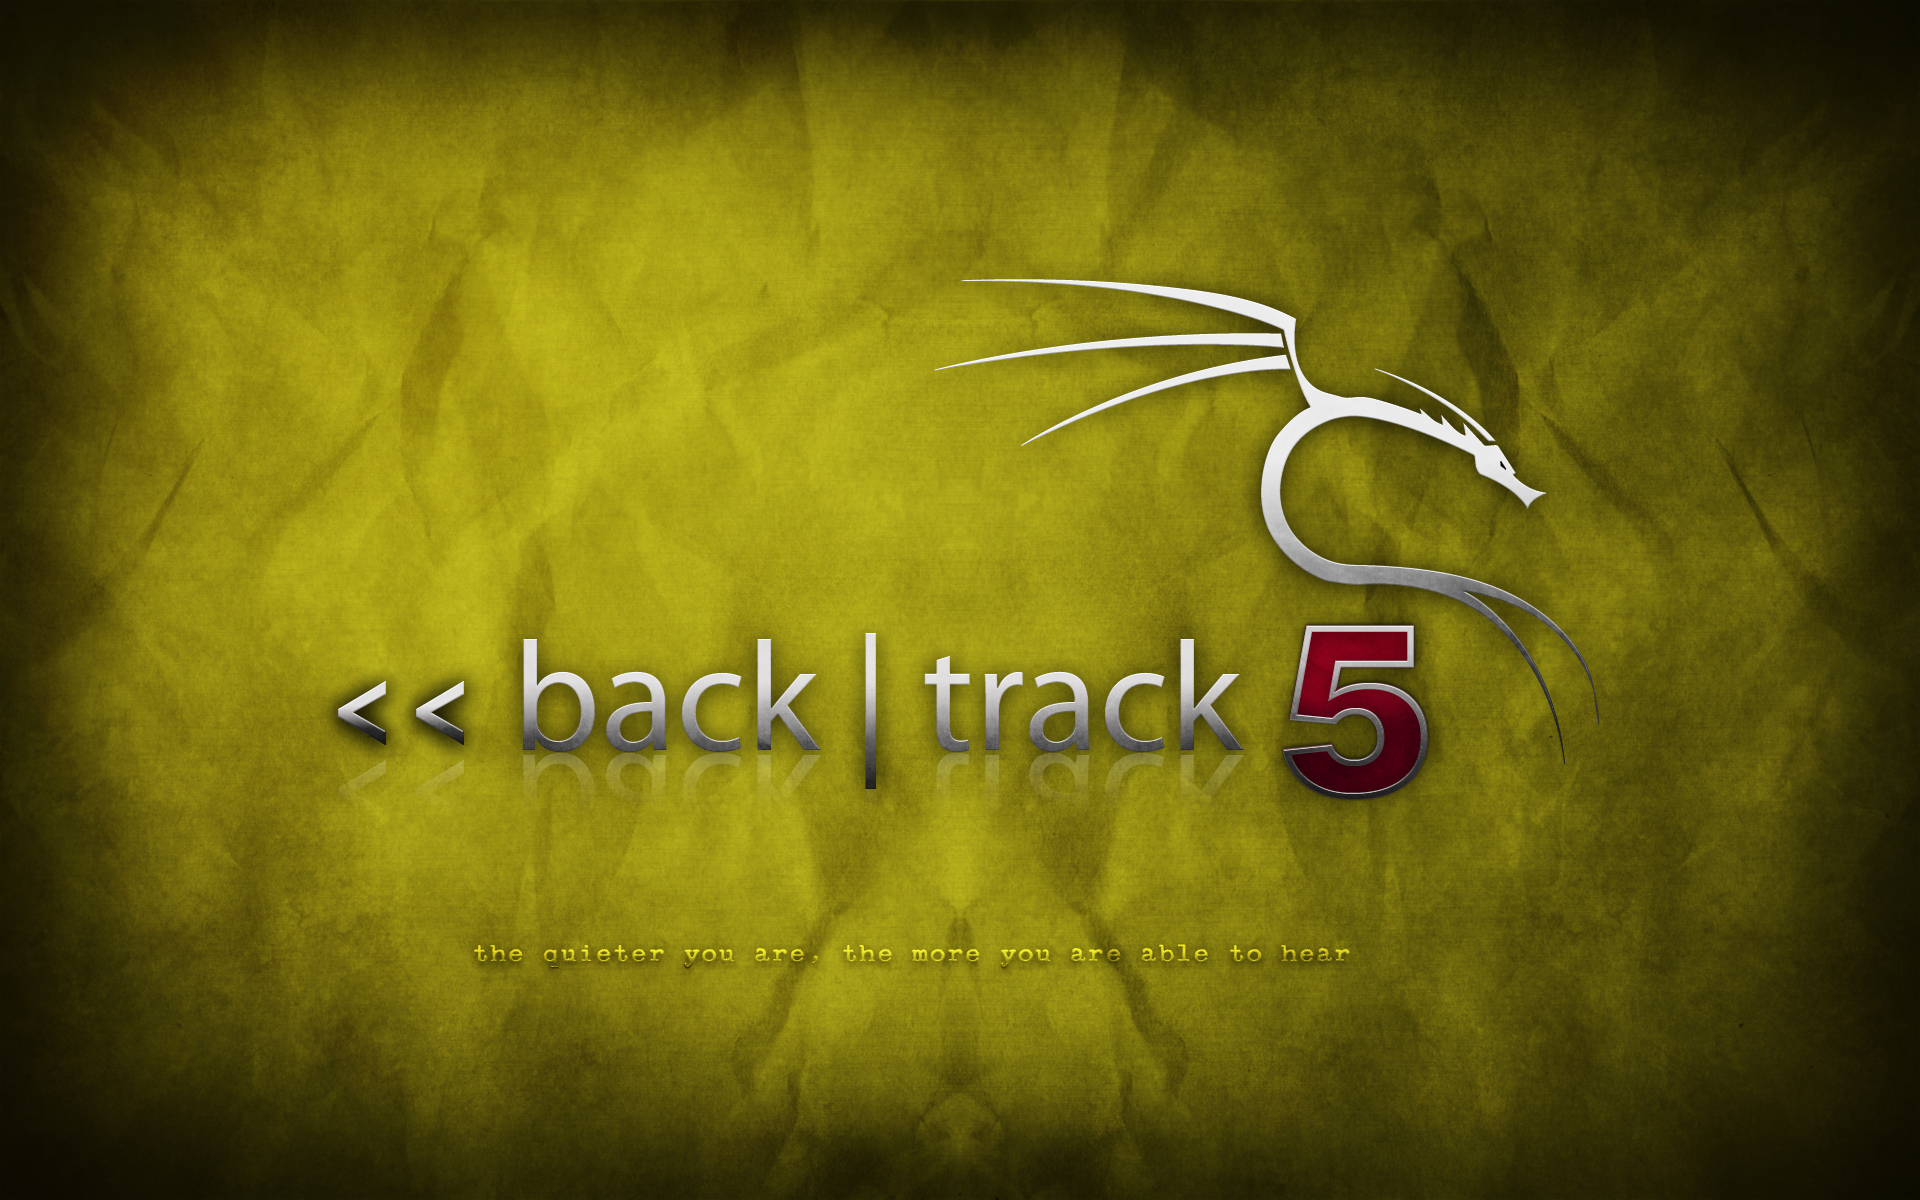 backtrack-5-yellow-2.png